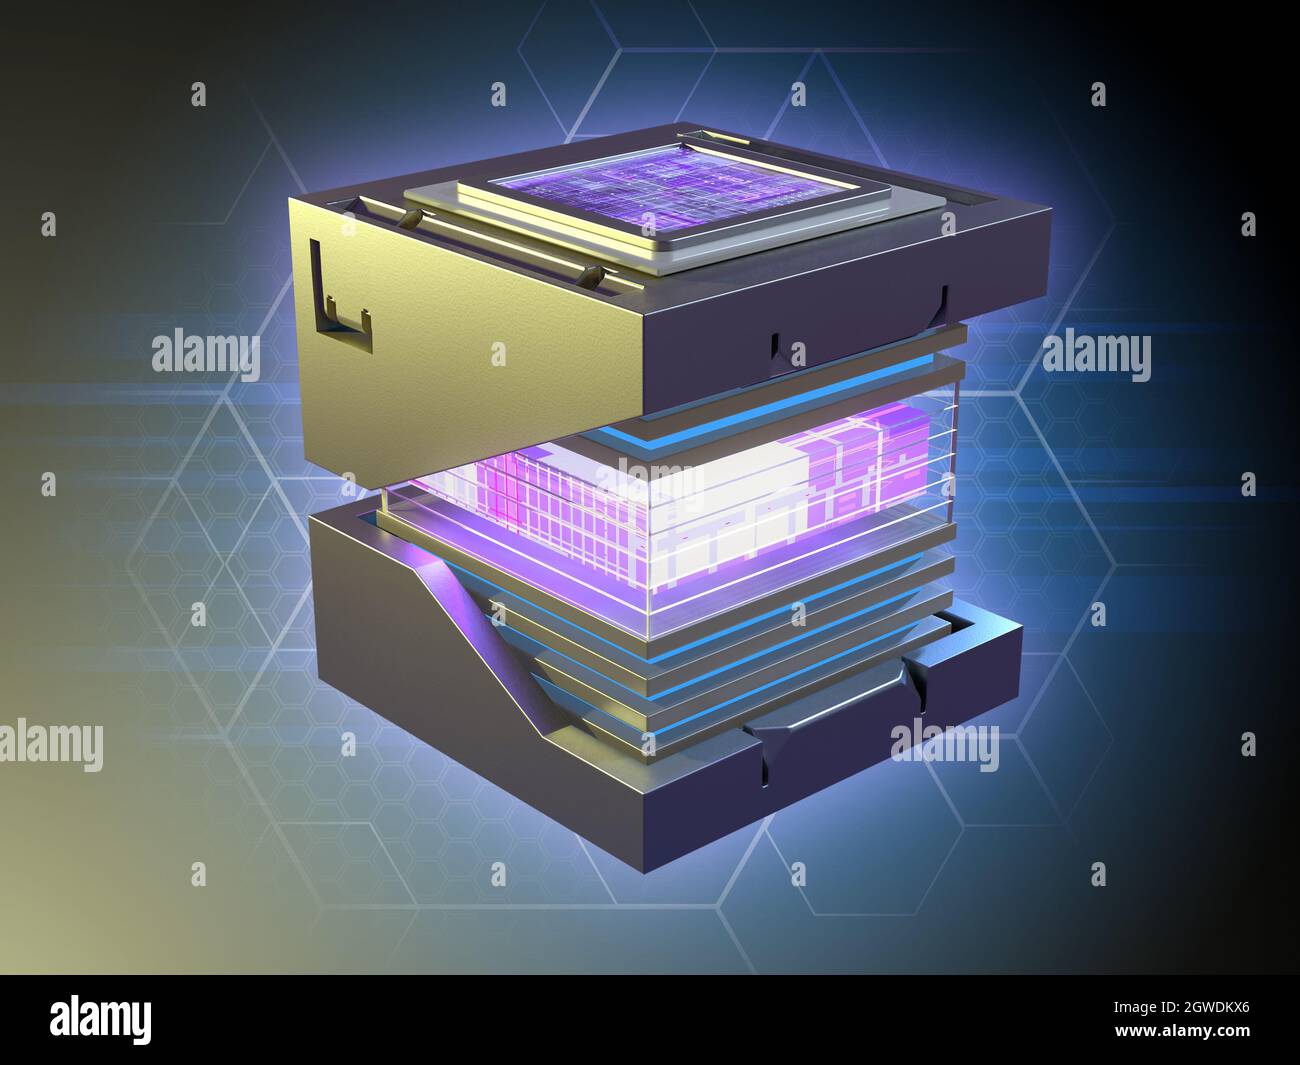 Cube structure encasing a powerful processing unit. Digital illustration. Stock Photo